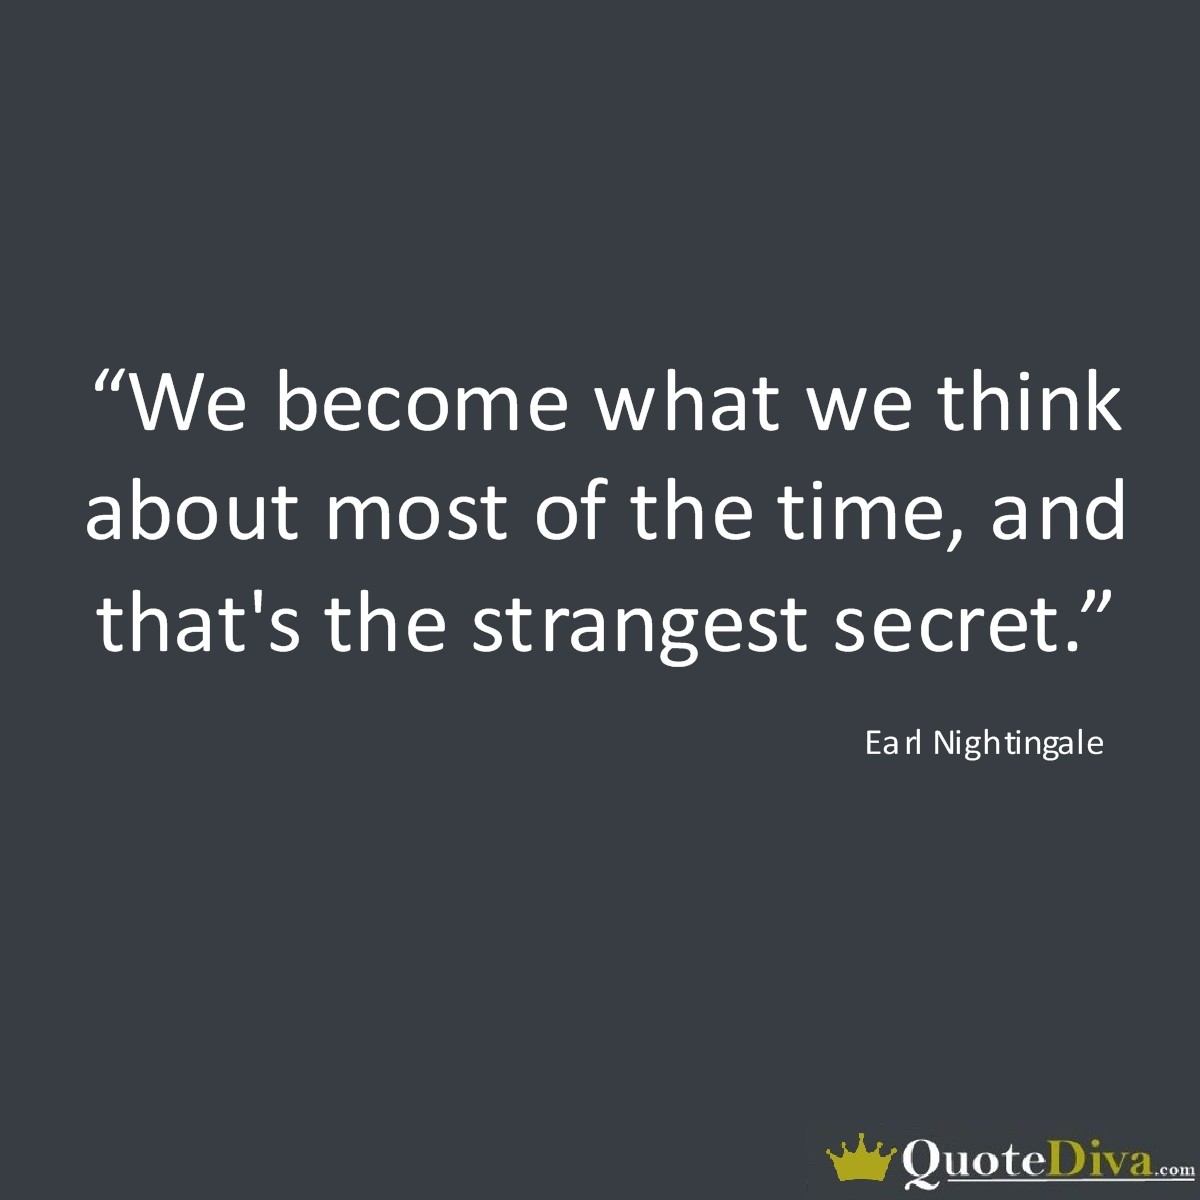 earl nightingal quote